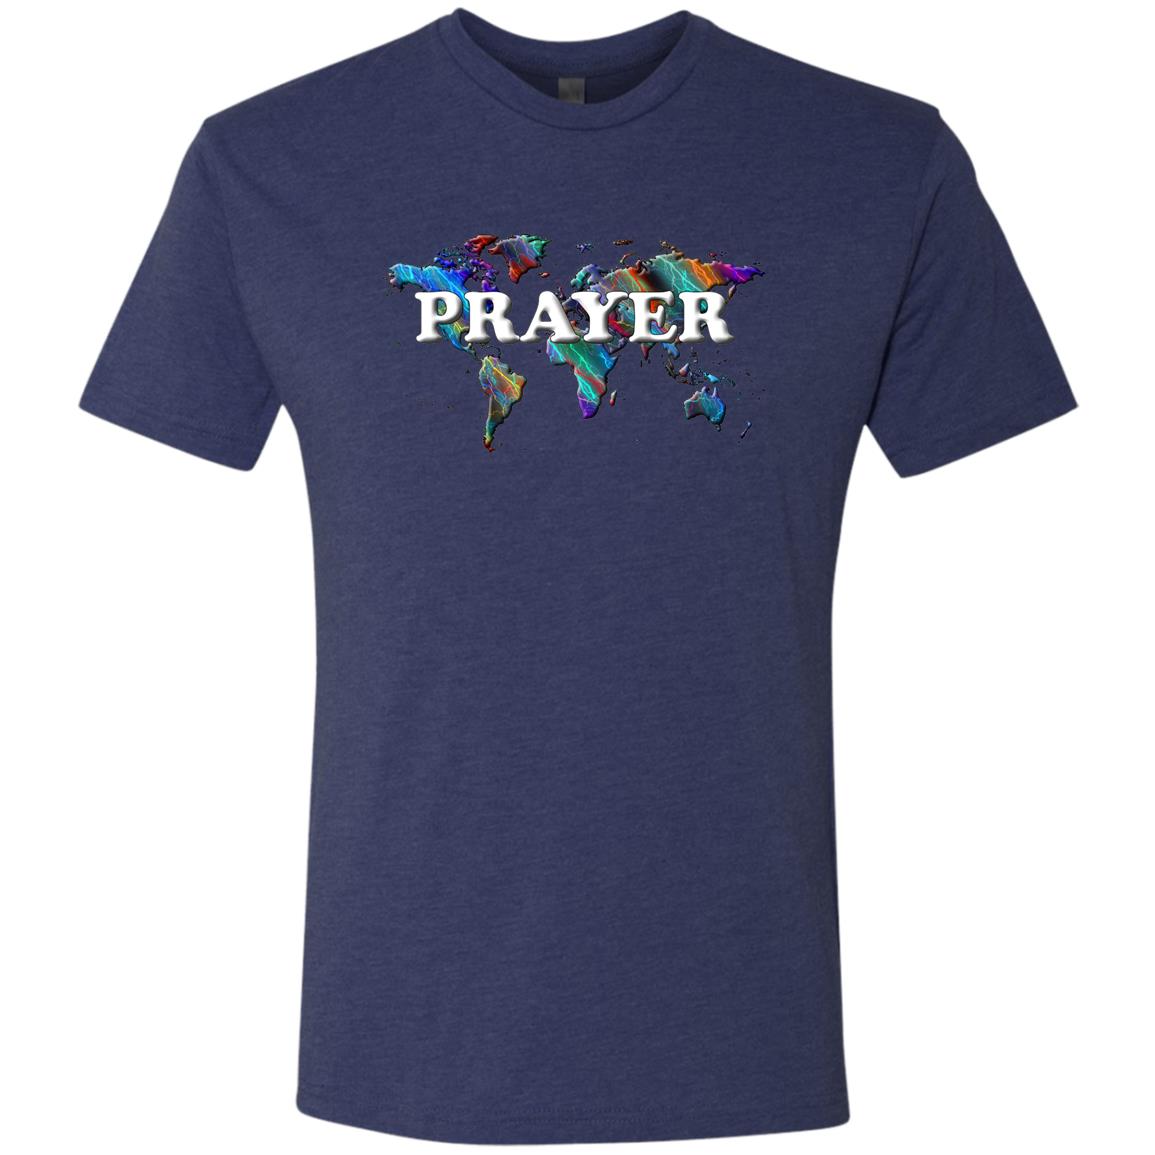 Prayer Statement T-Shirt